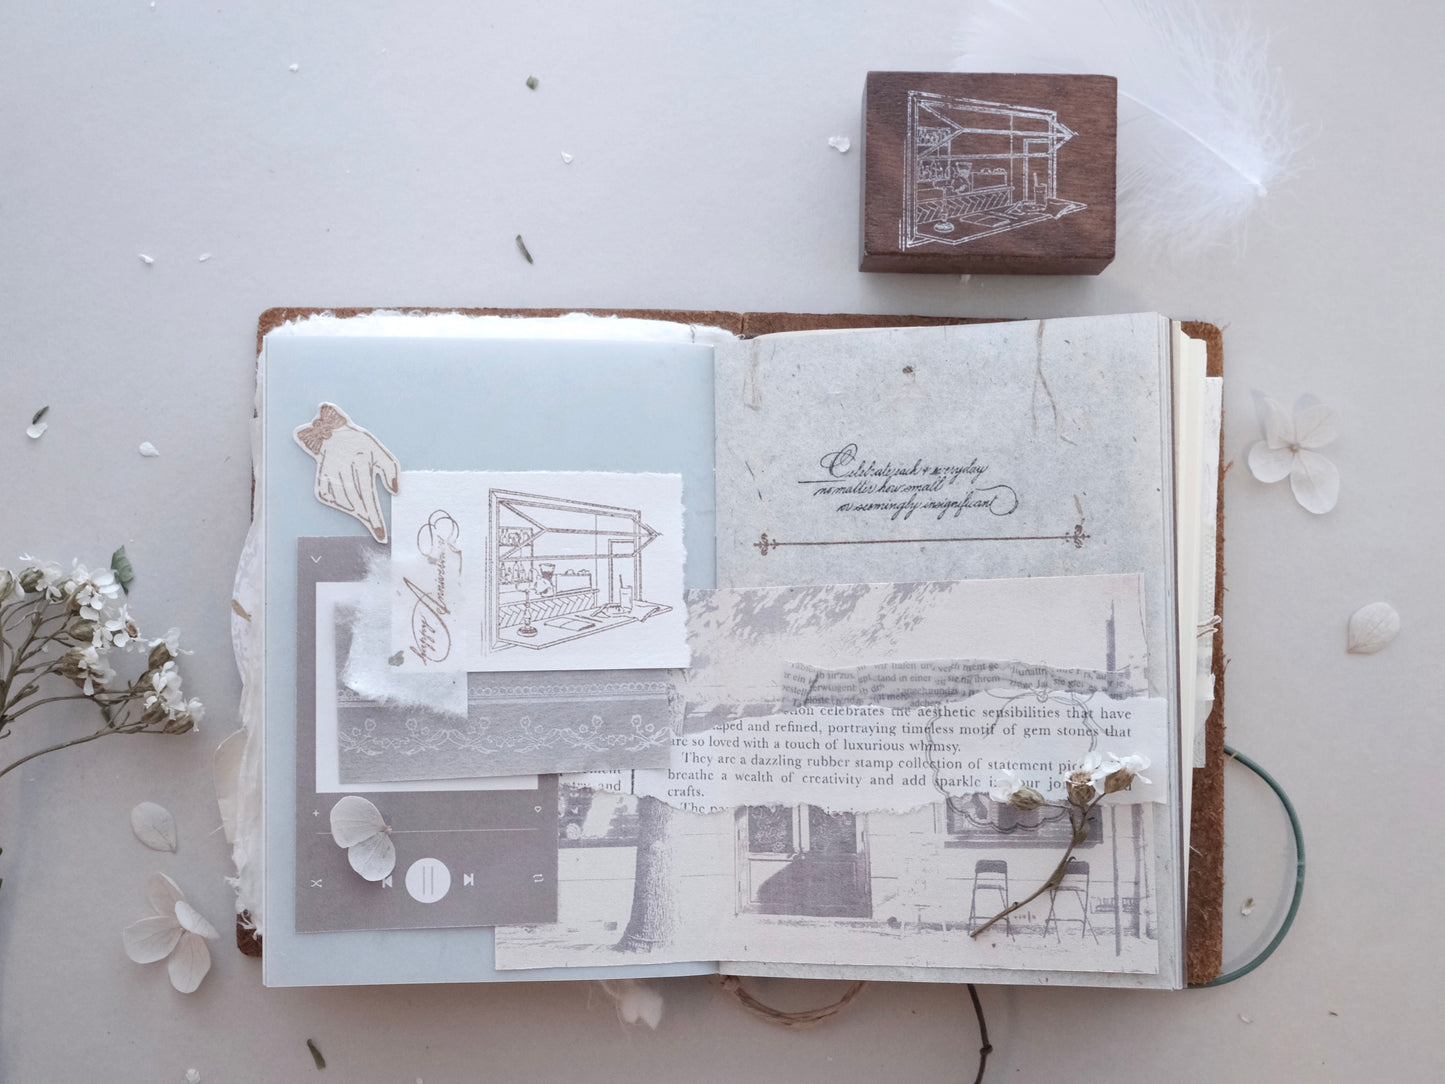 Bon Voyage Handmade Passport Journal in collaboration with Cafe Analog